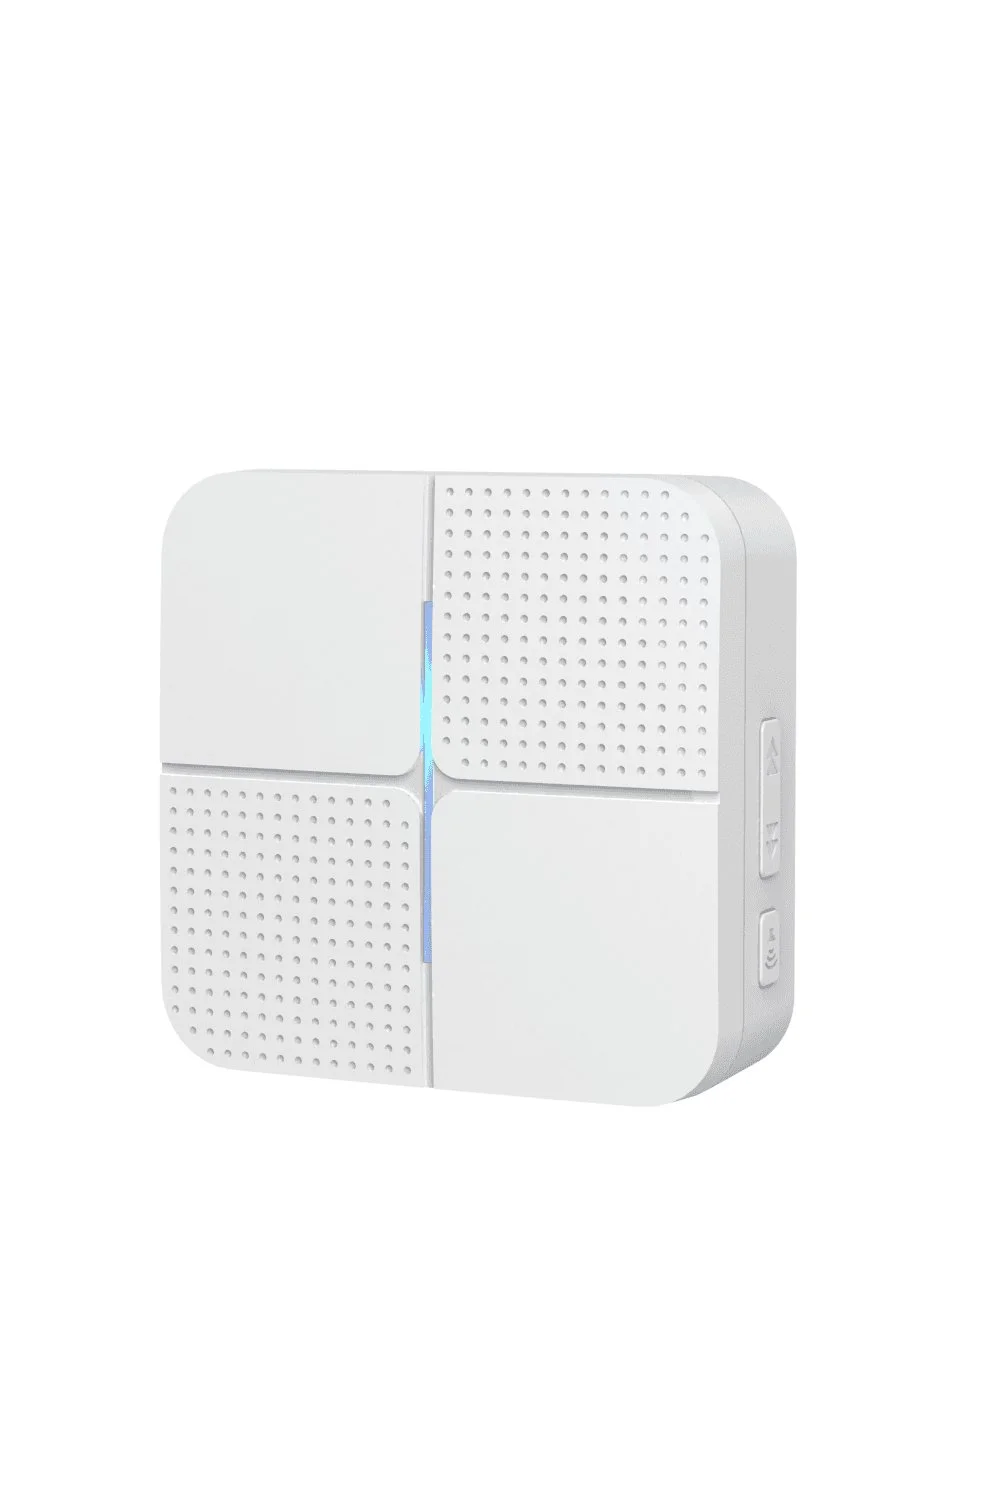 Woox видеозвънец с двупосочно аудио Doorbell - R4957 - Smart WiFi Video Doorbell and Chime - image 1